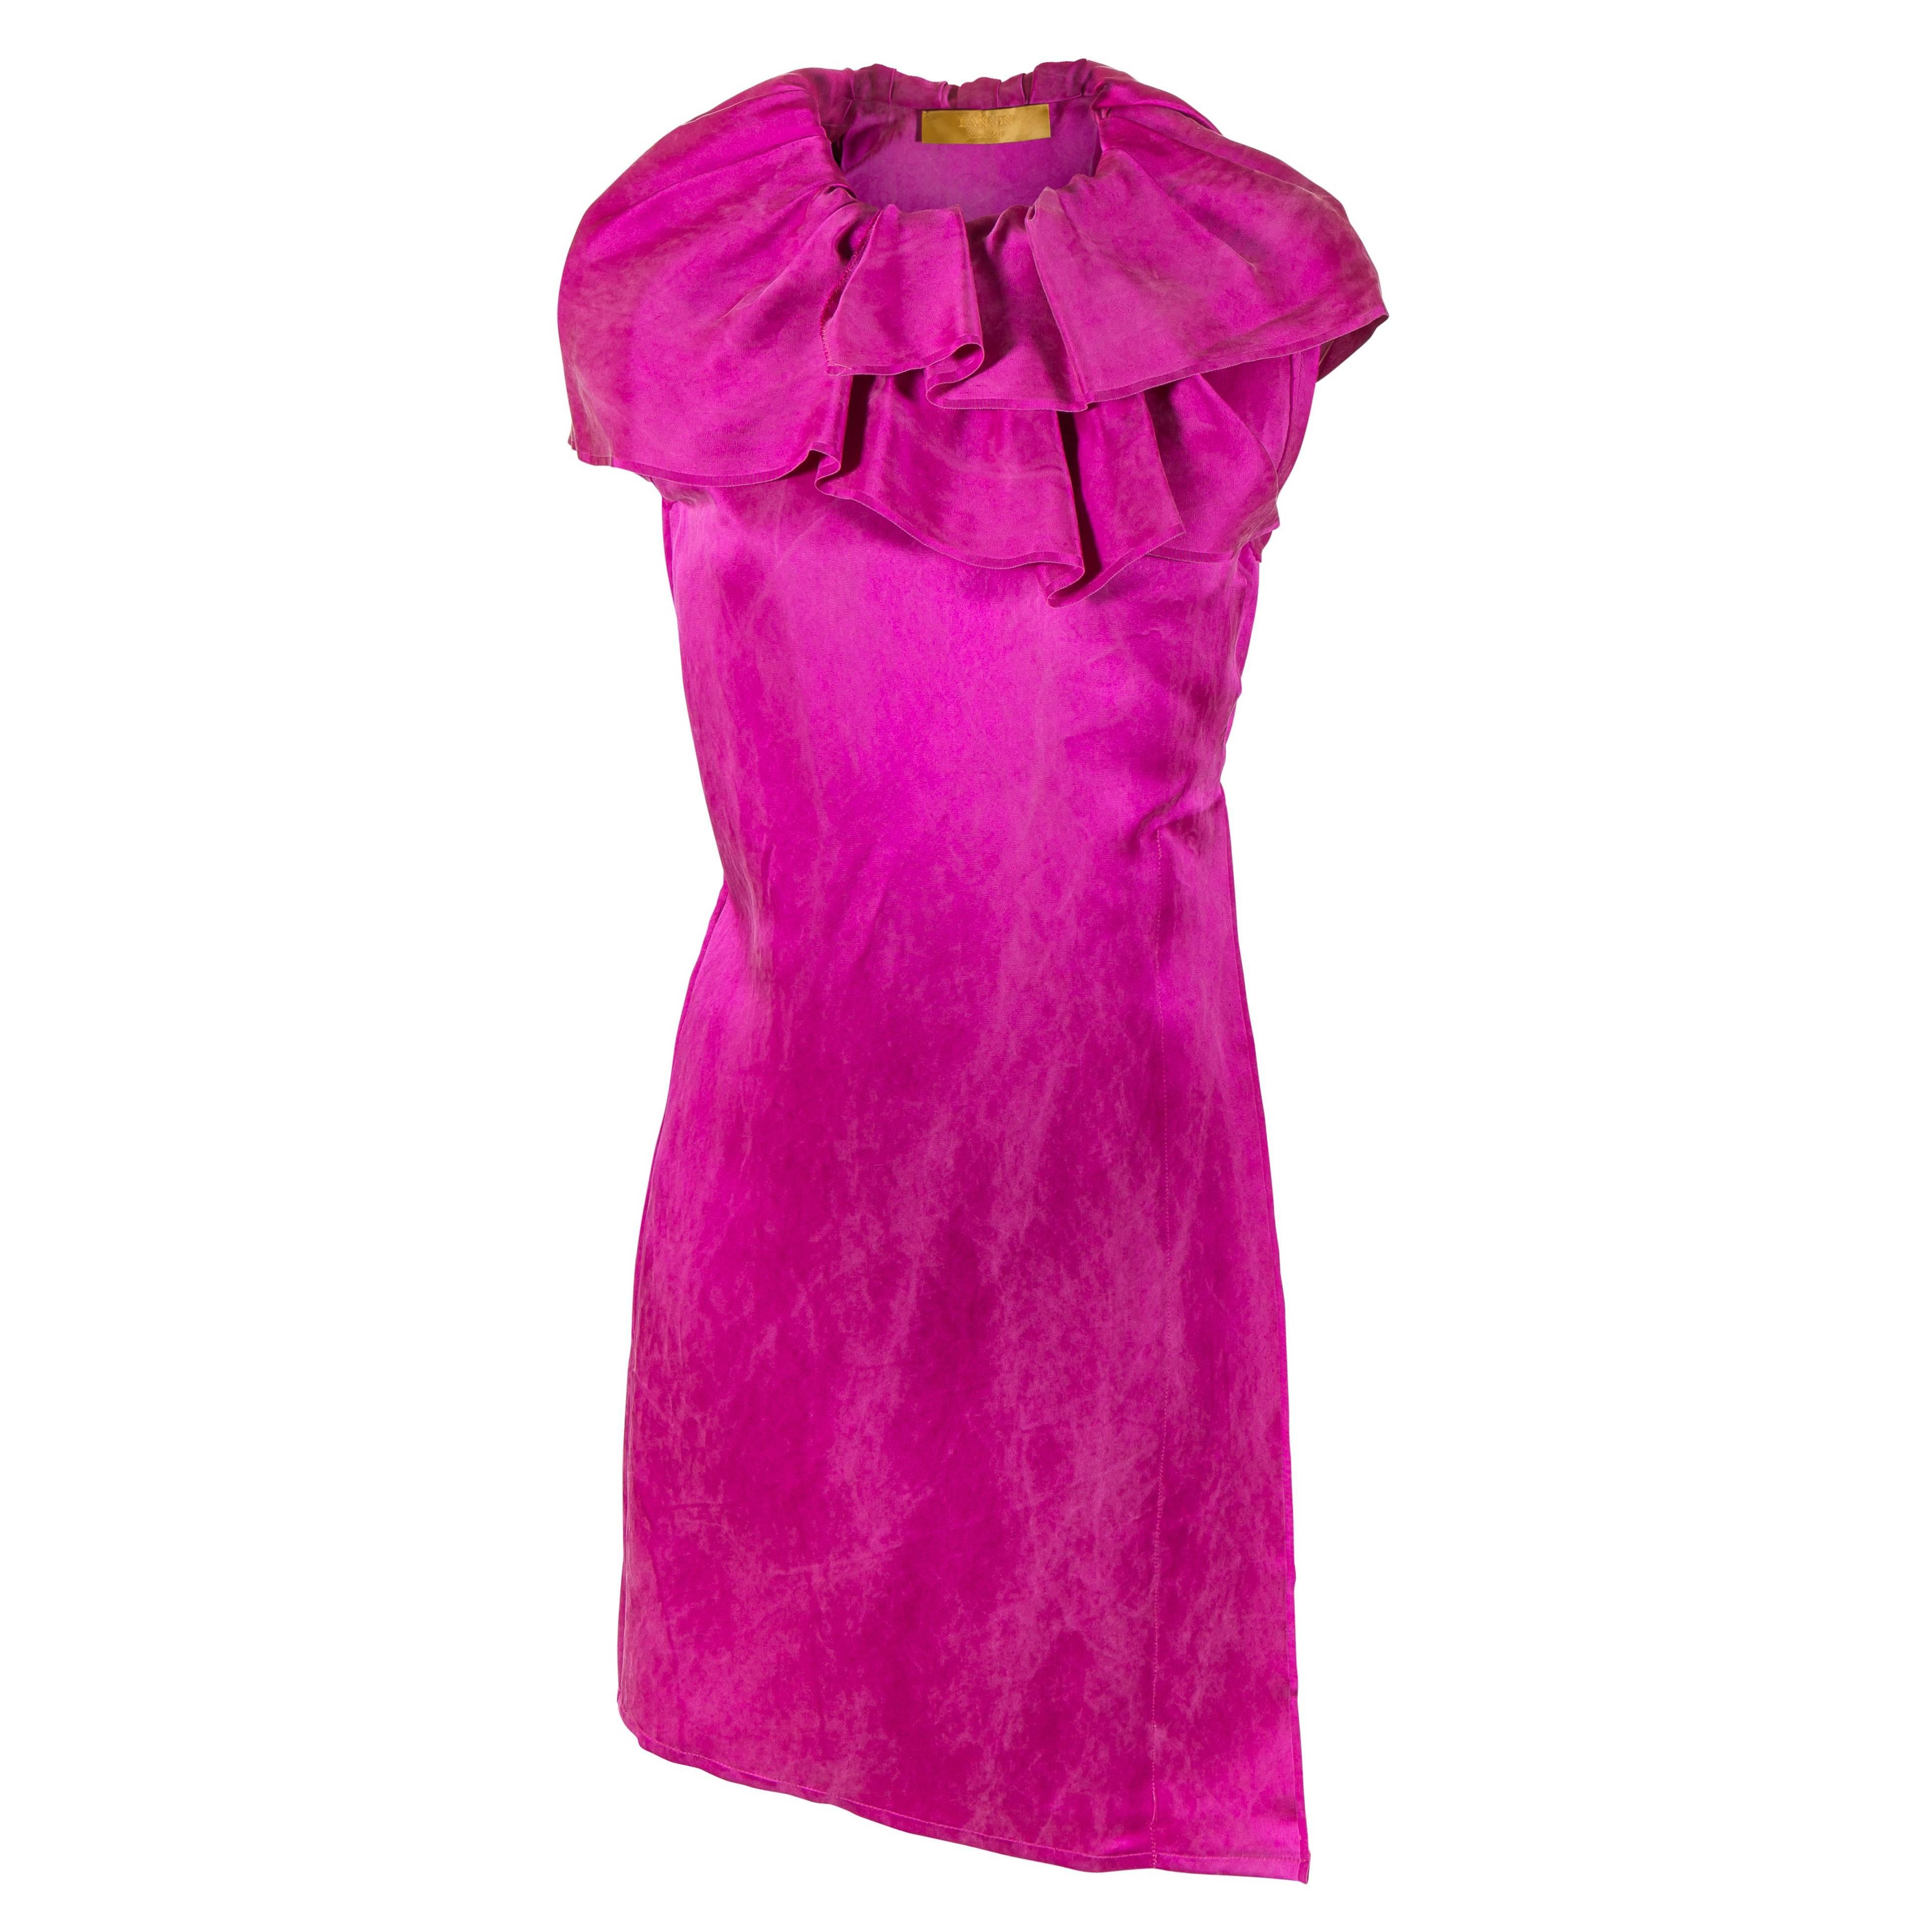 Alber Elbaz for Lanvin Fall 2007 RTW Fuchsia Silk Dress with Ruffle  For Sale